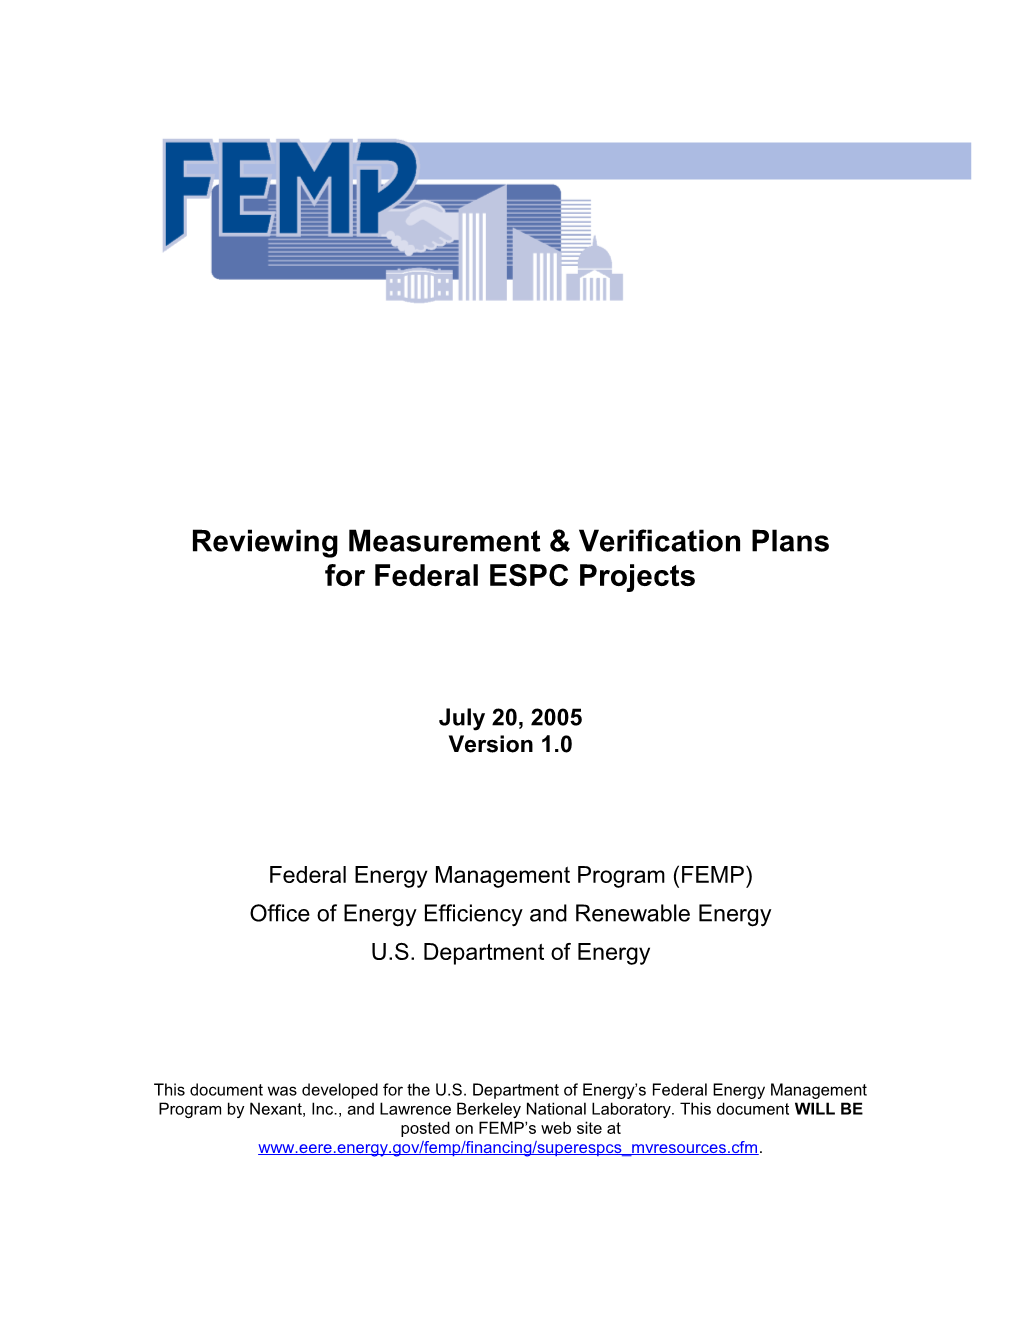 Reviewing Measurement and Verification Plans for FEMP Super ESPC Projects